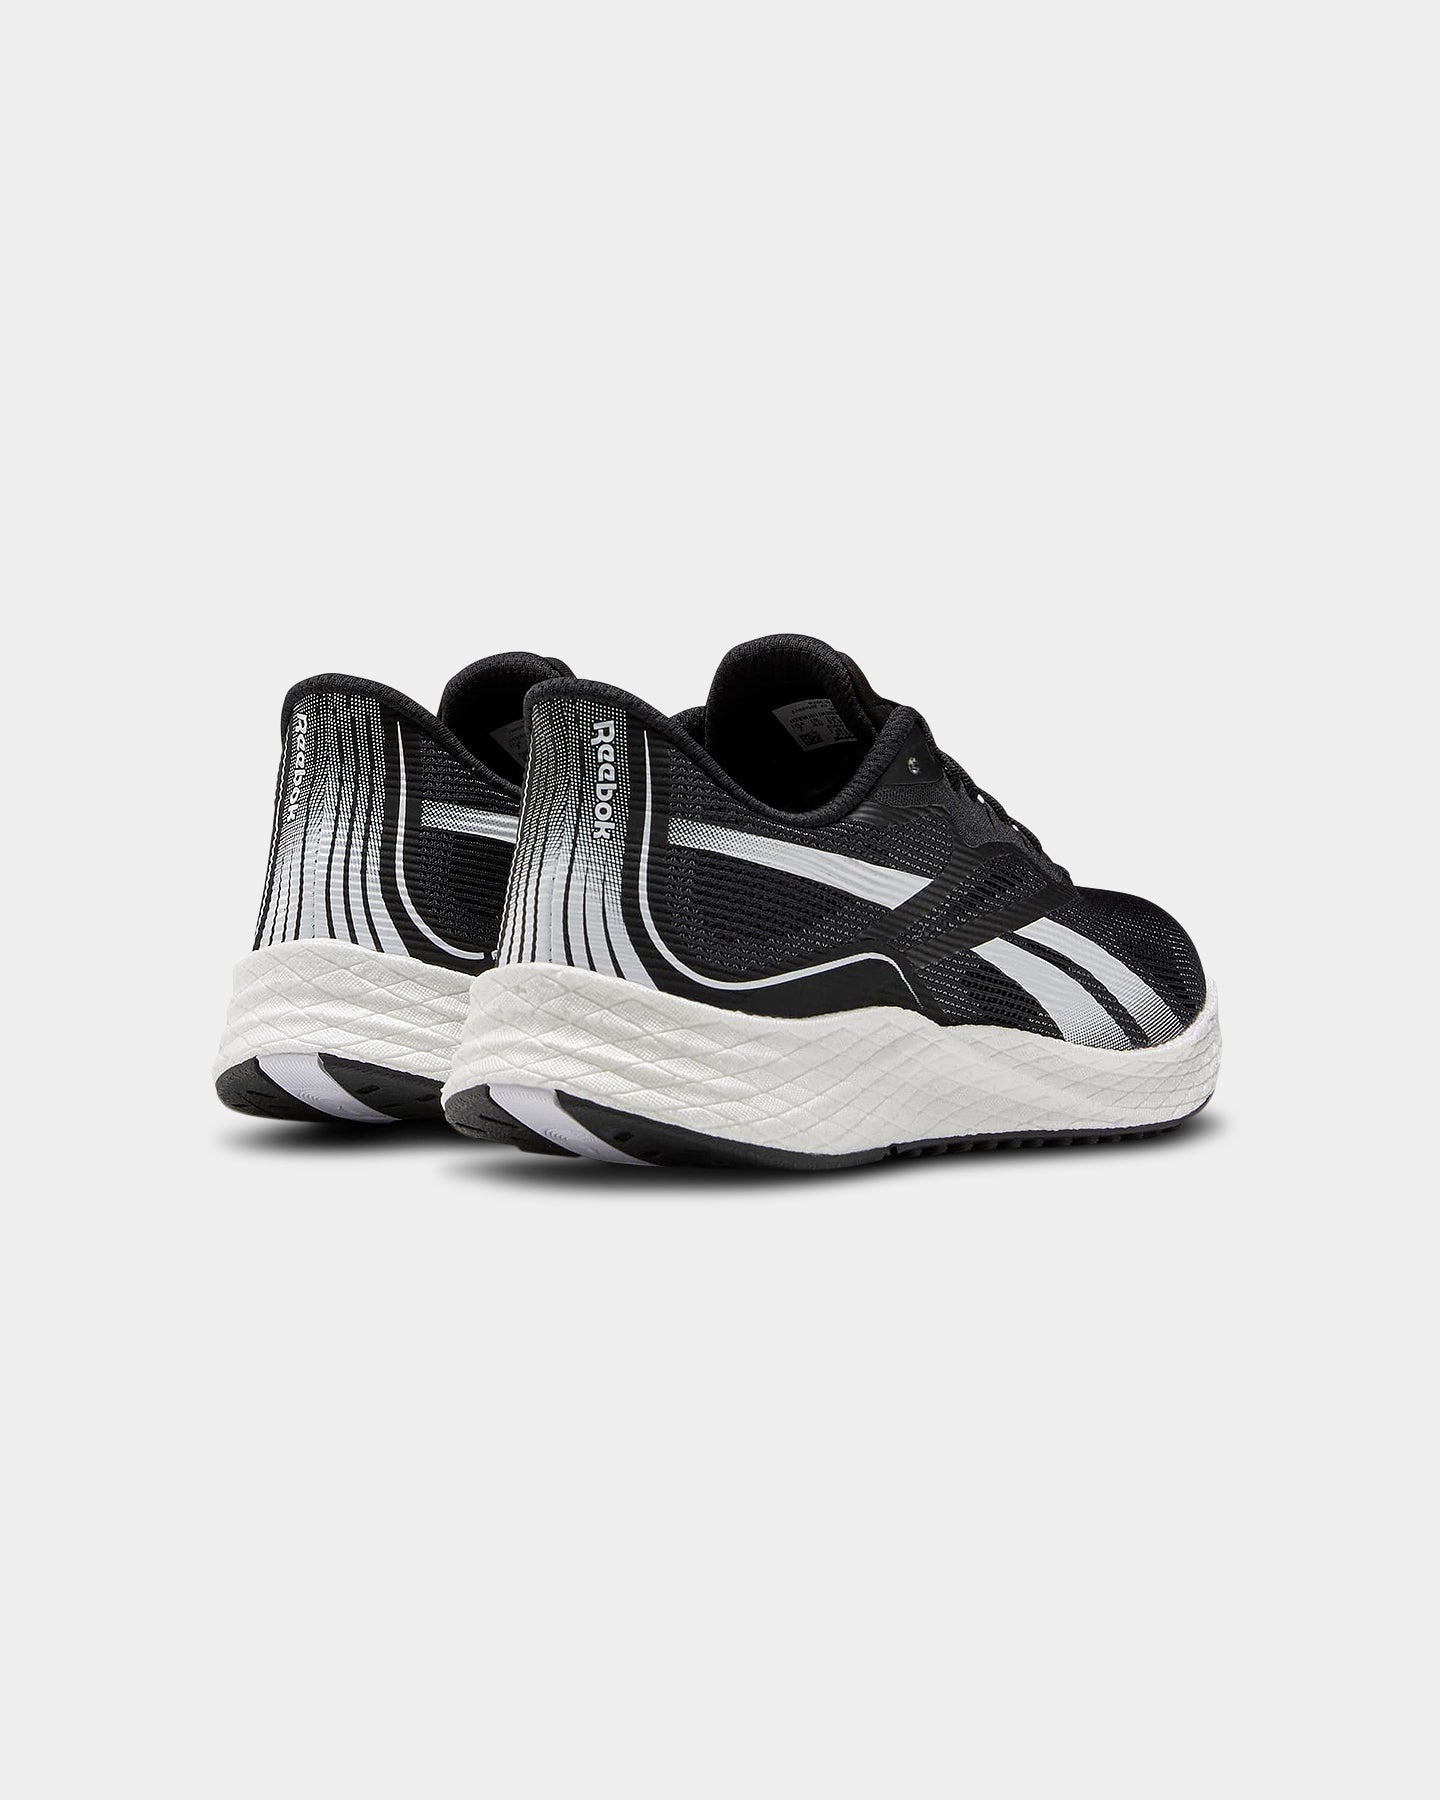 Reebok Floatride Energy 3 Womens Running Shoe, Black/White, 7.5 A3